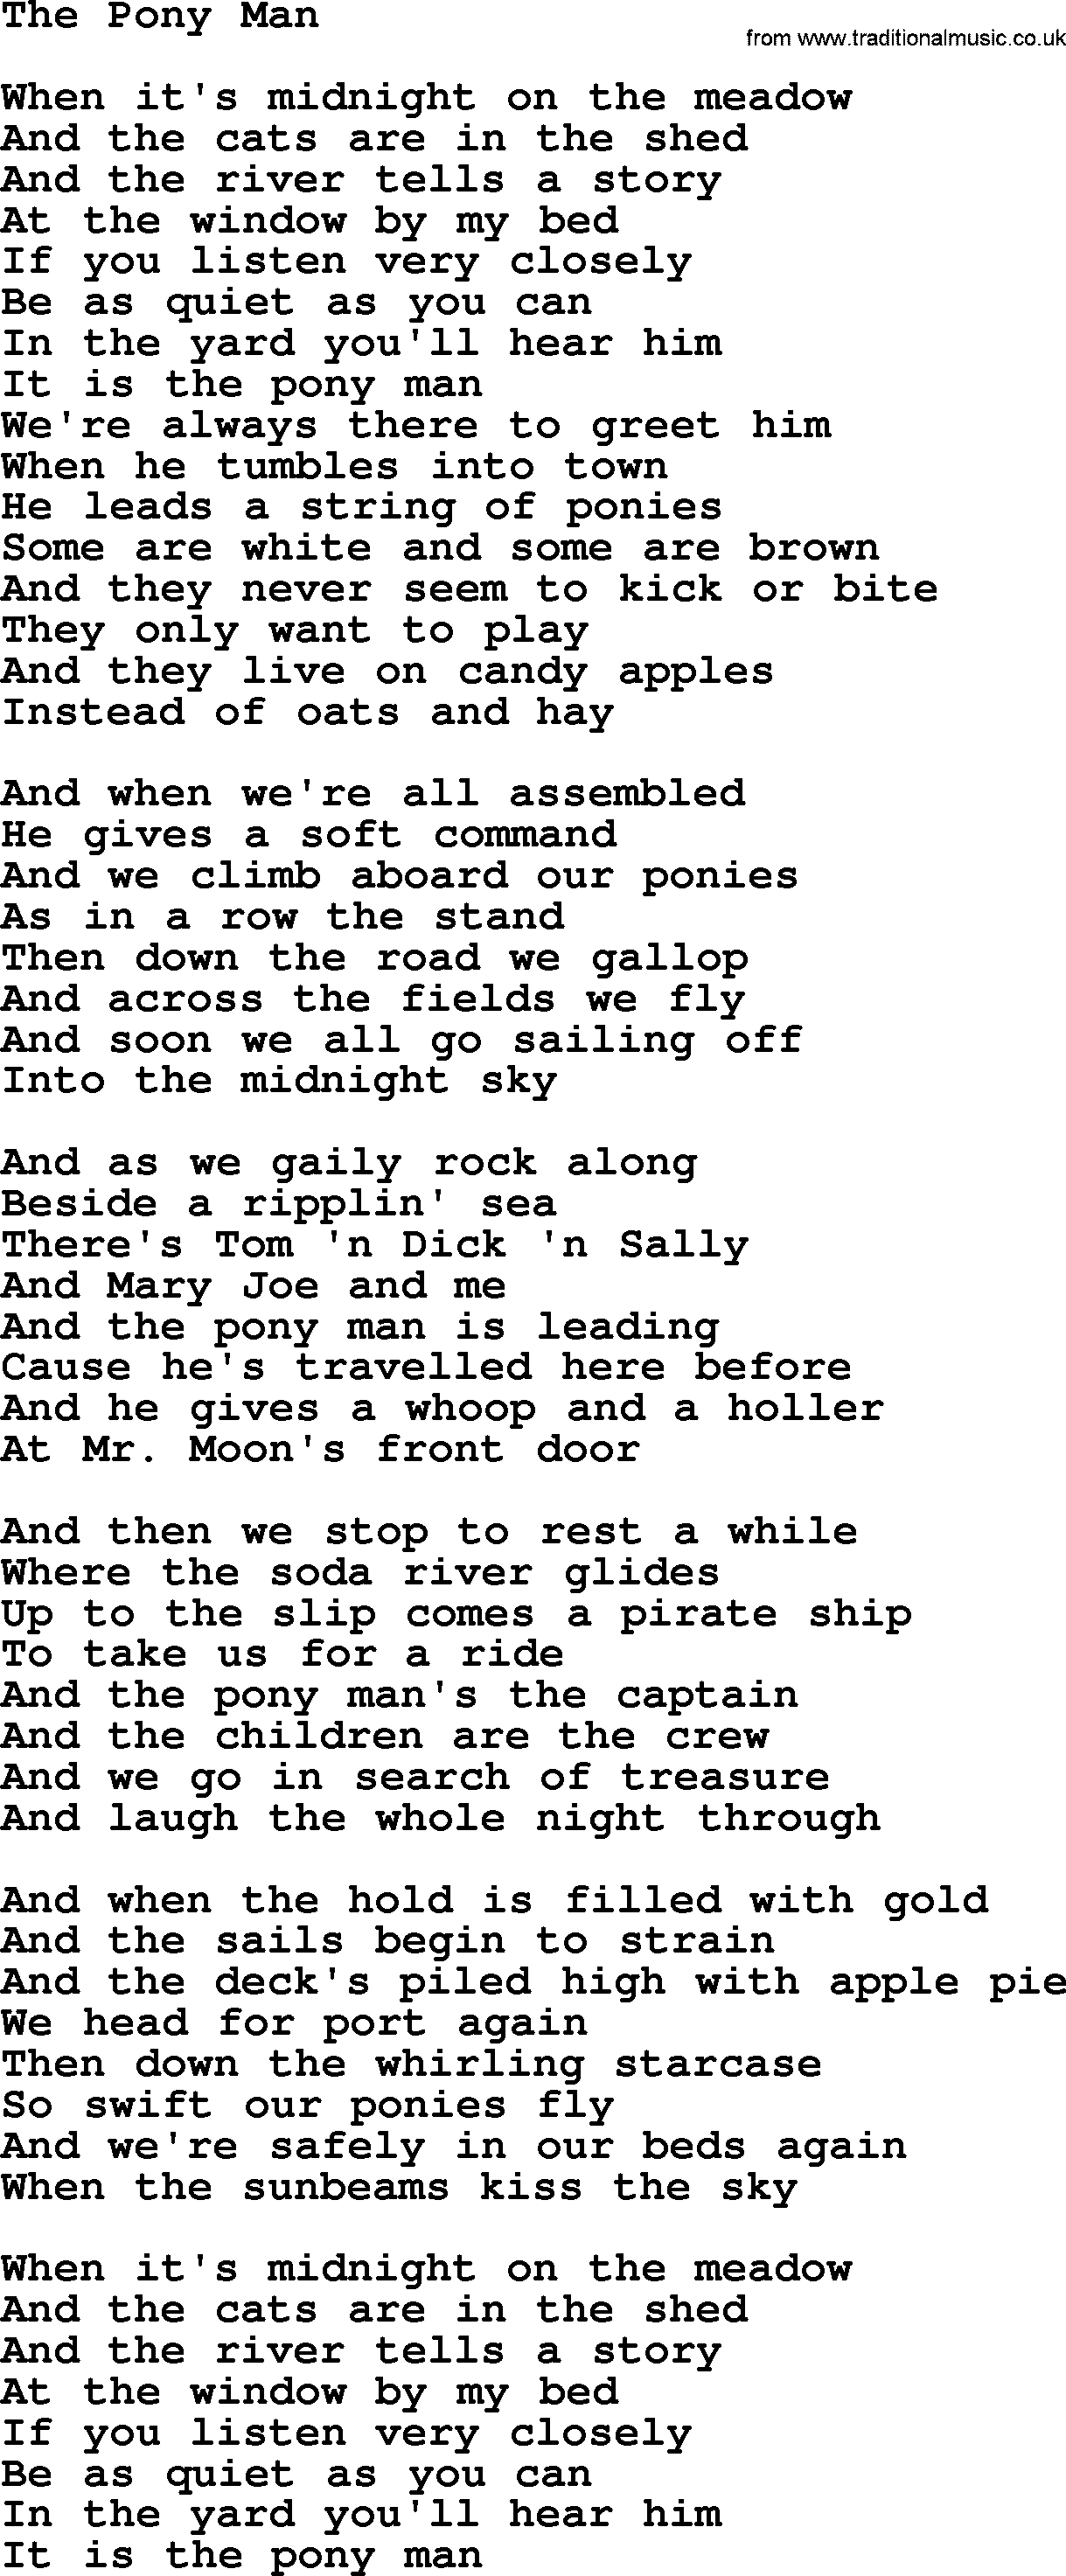 Gordon Lightfoot song The Pony Man, lyrics